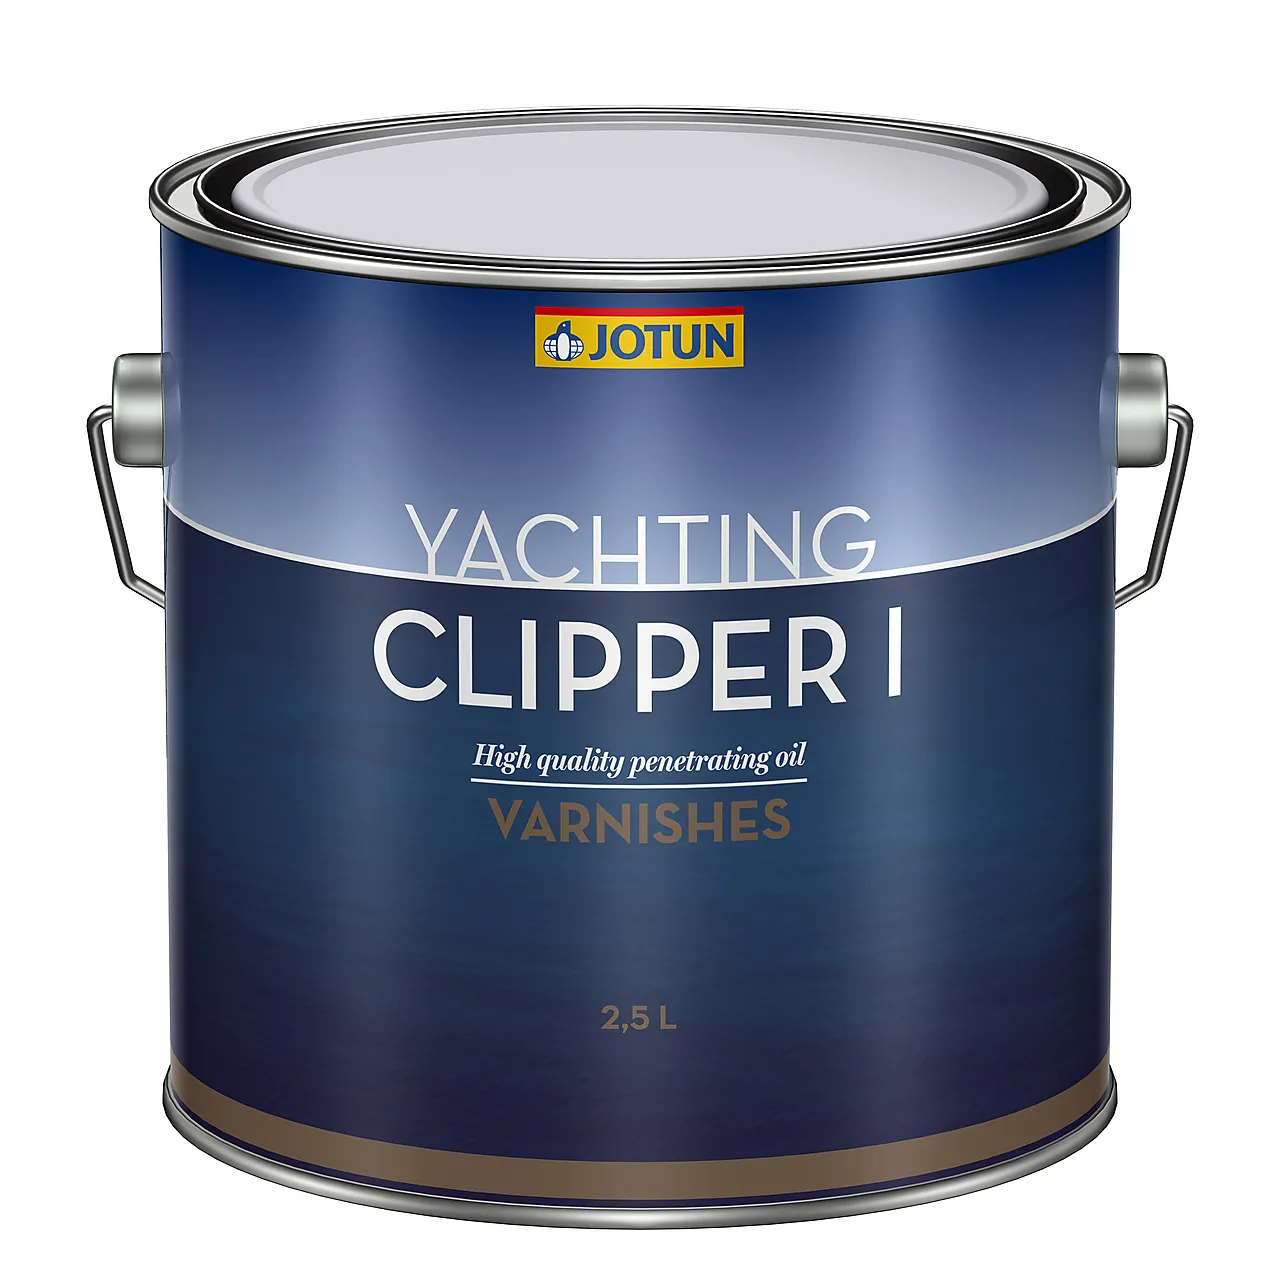 Clipper I 2,5 liter